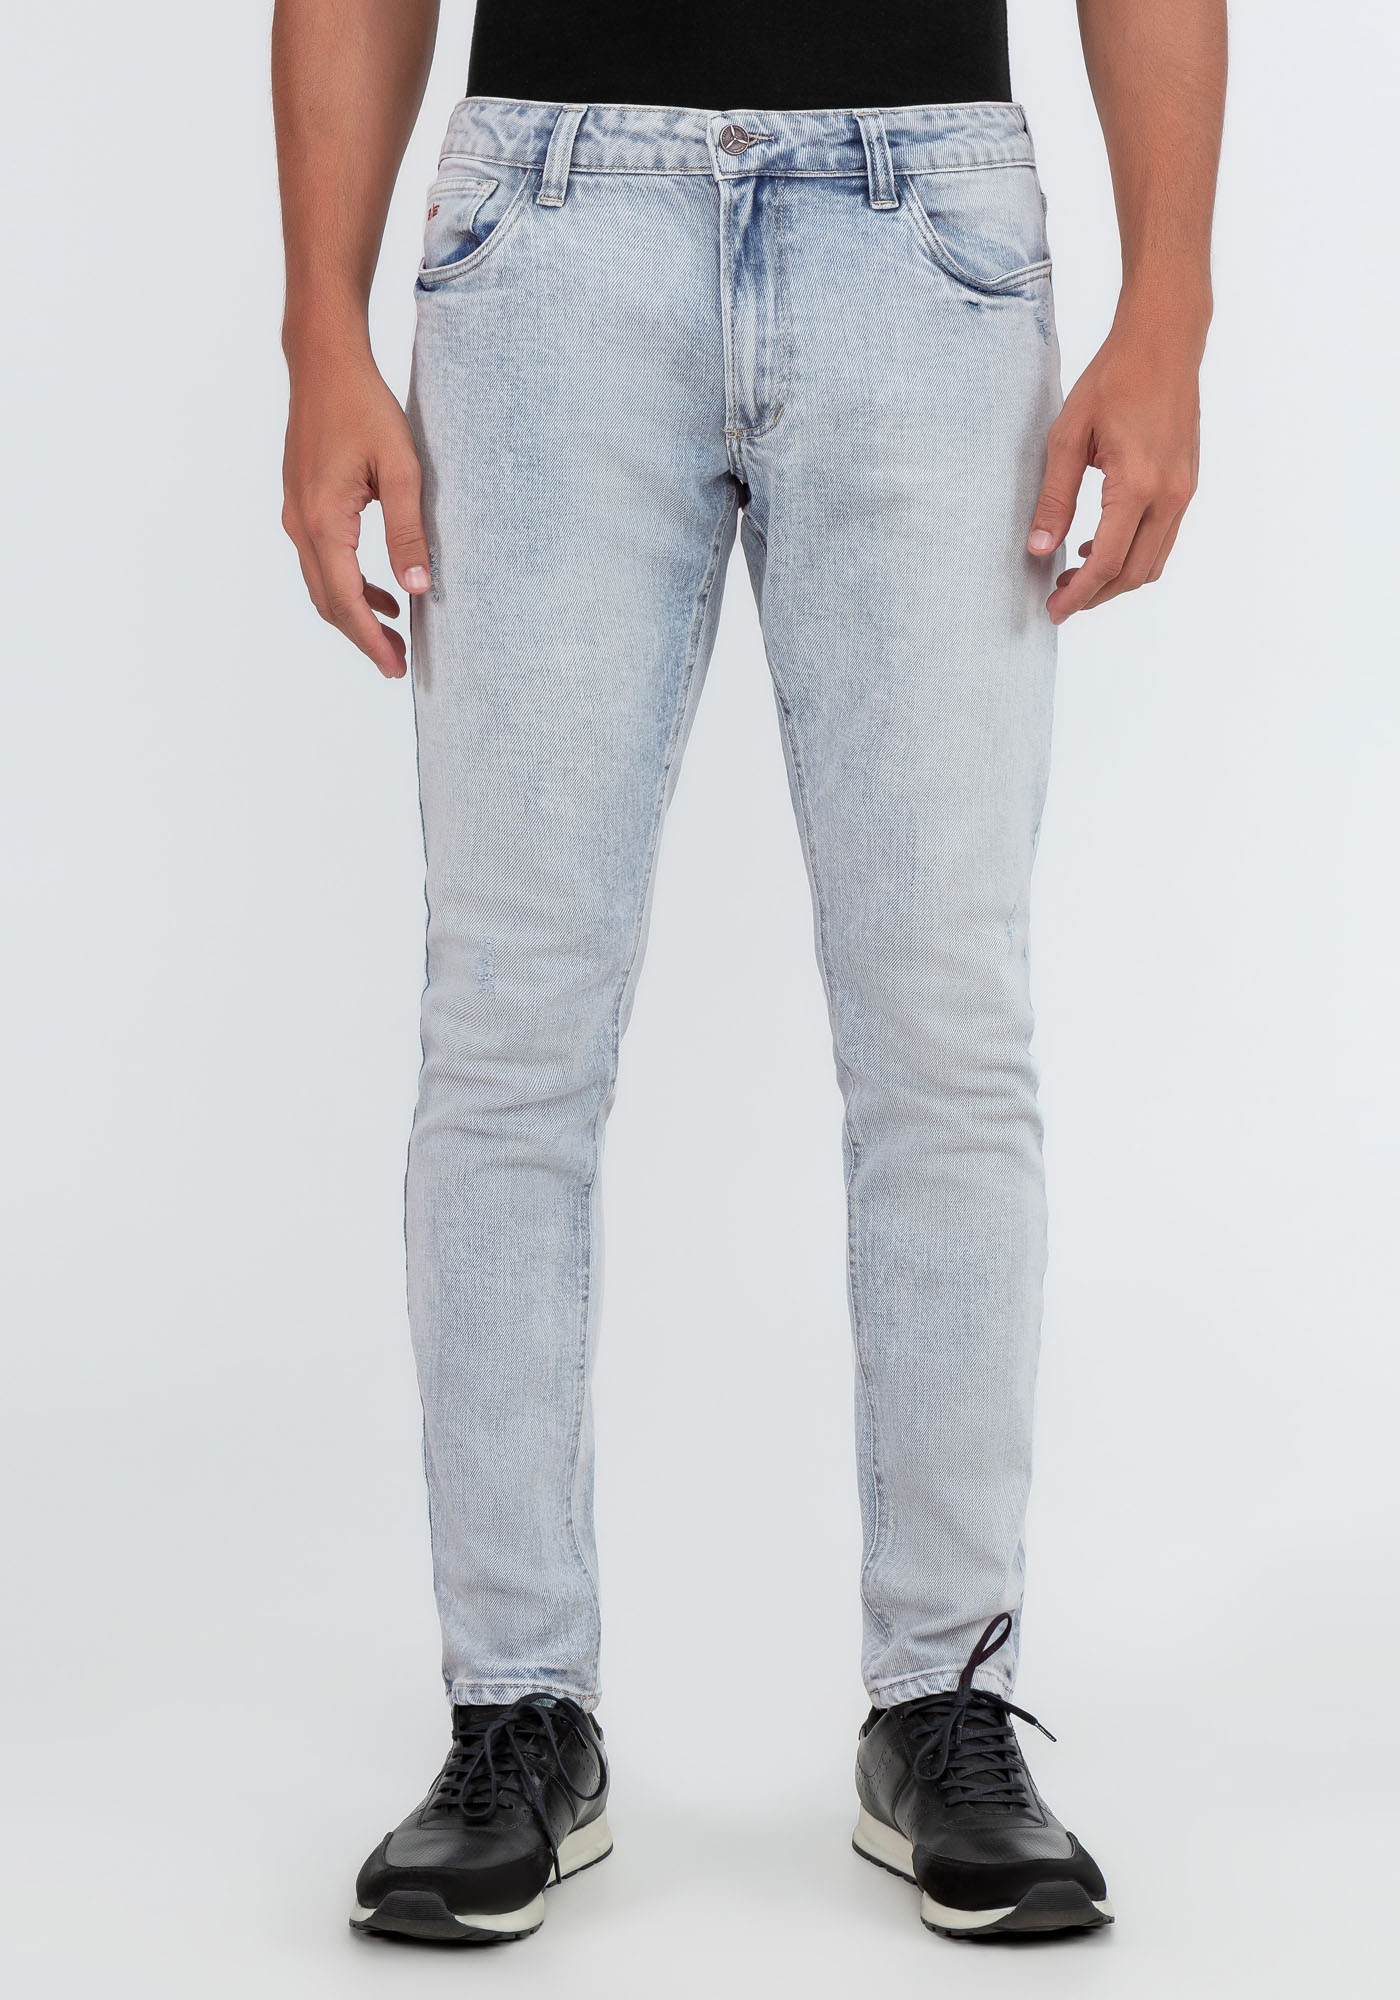 Calça jeans Masculina Skinny Délavé Street - Azul Claro